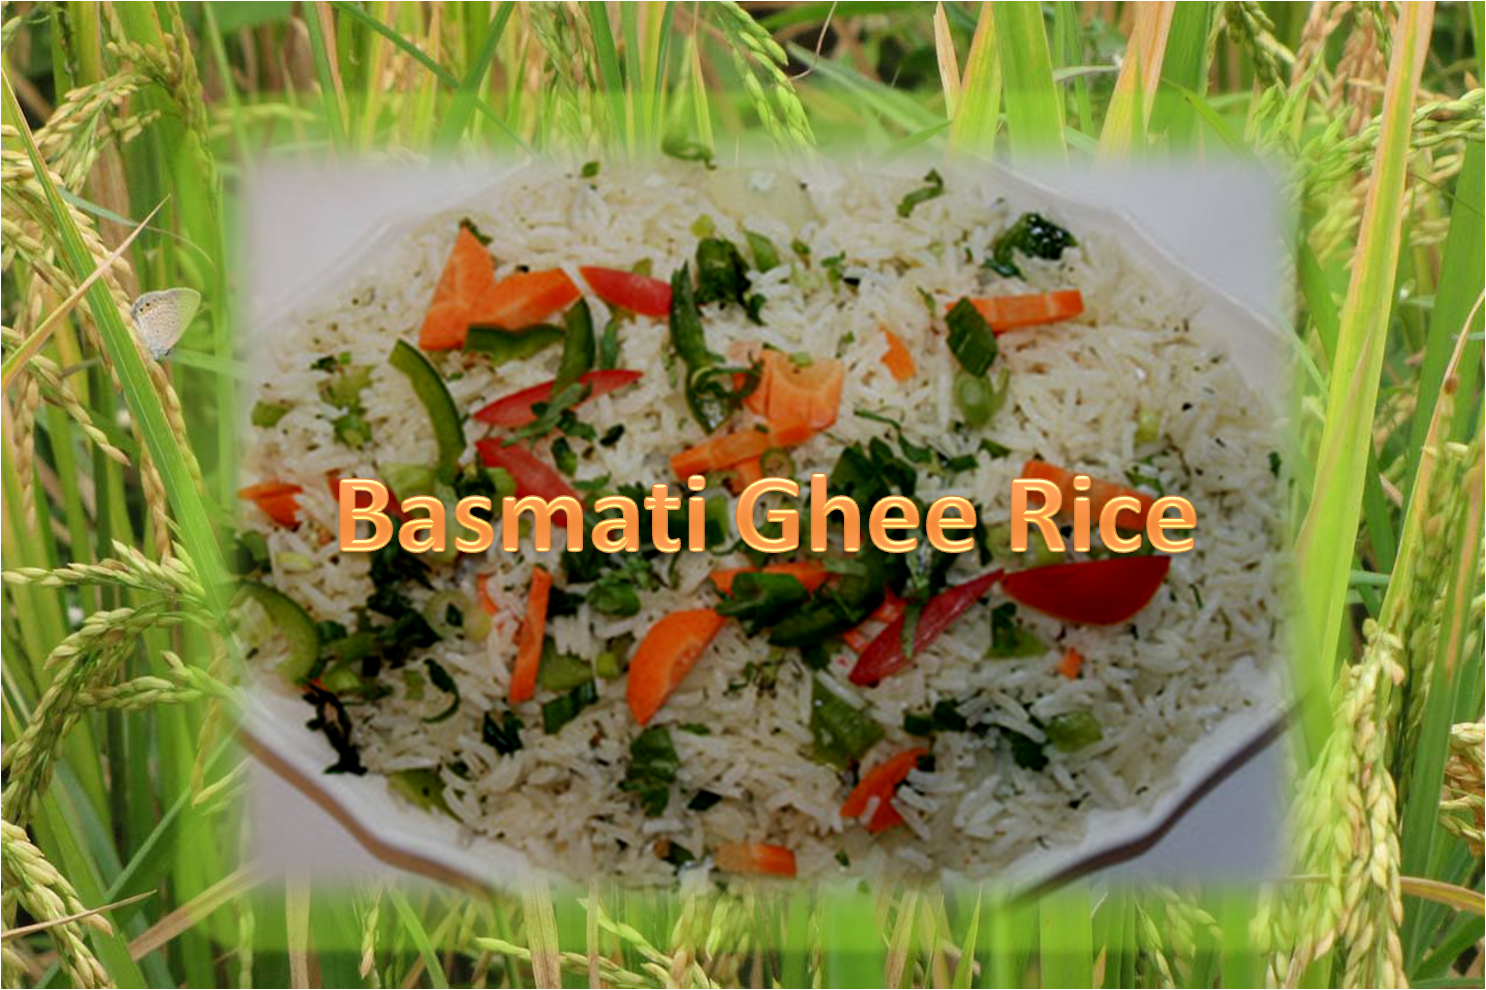 Basmati ghee rice